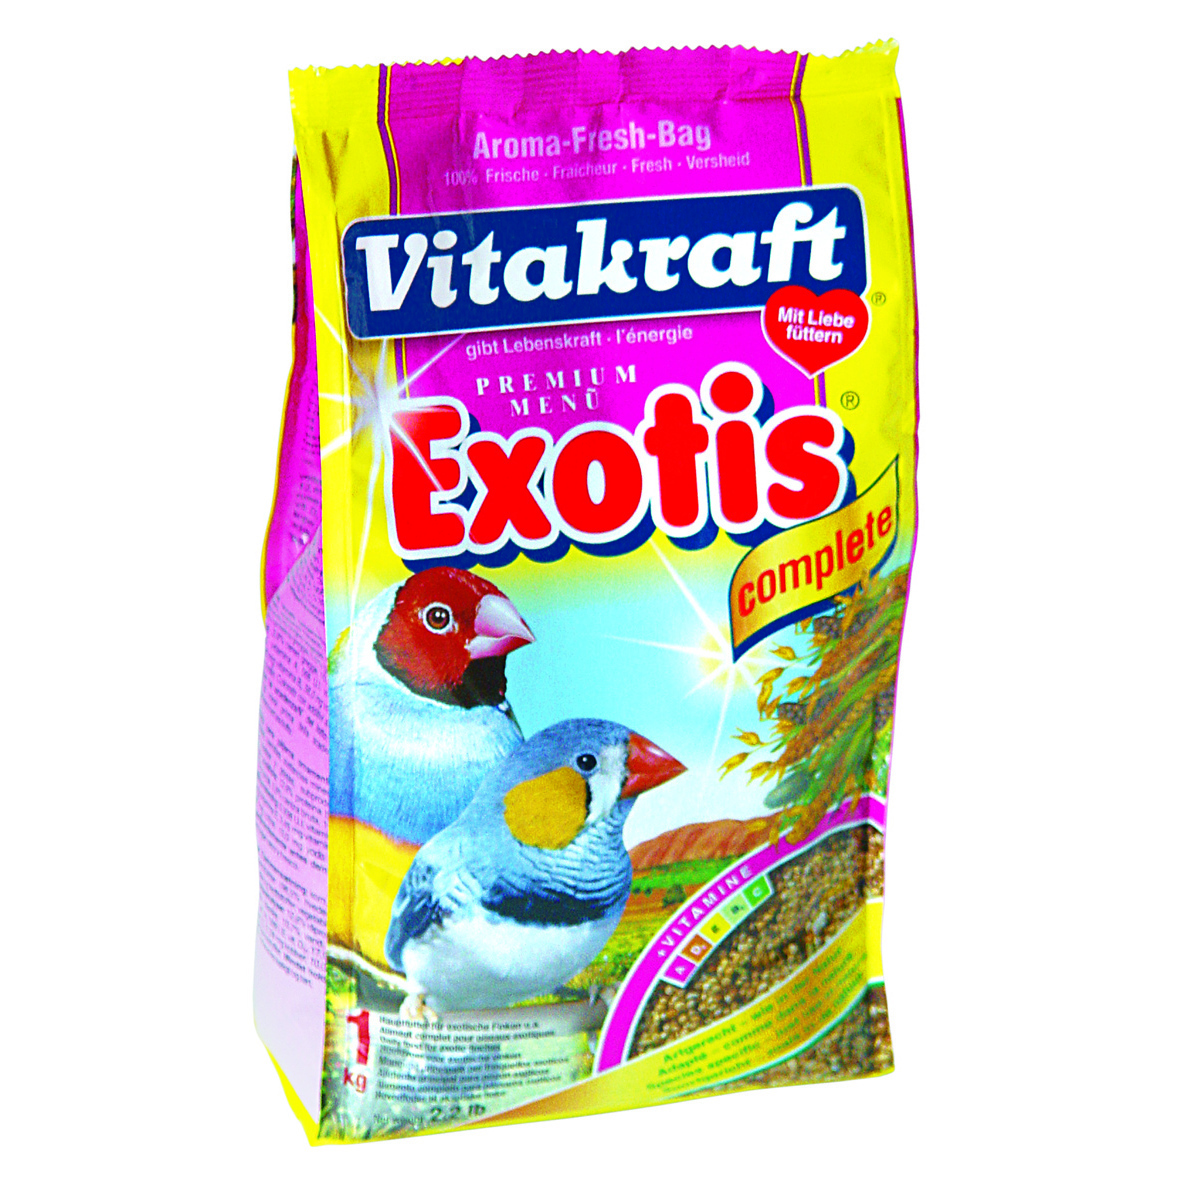 Vitakraft Exotis Premium Menü complete 1kg 1kg